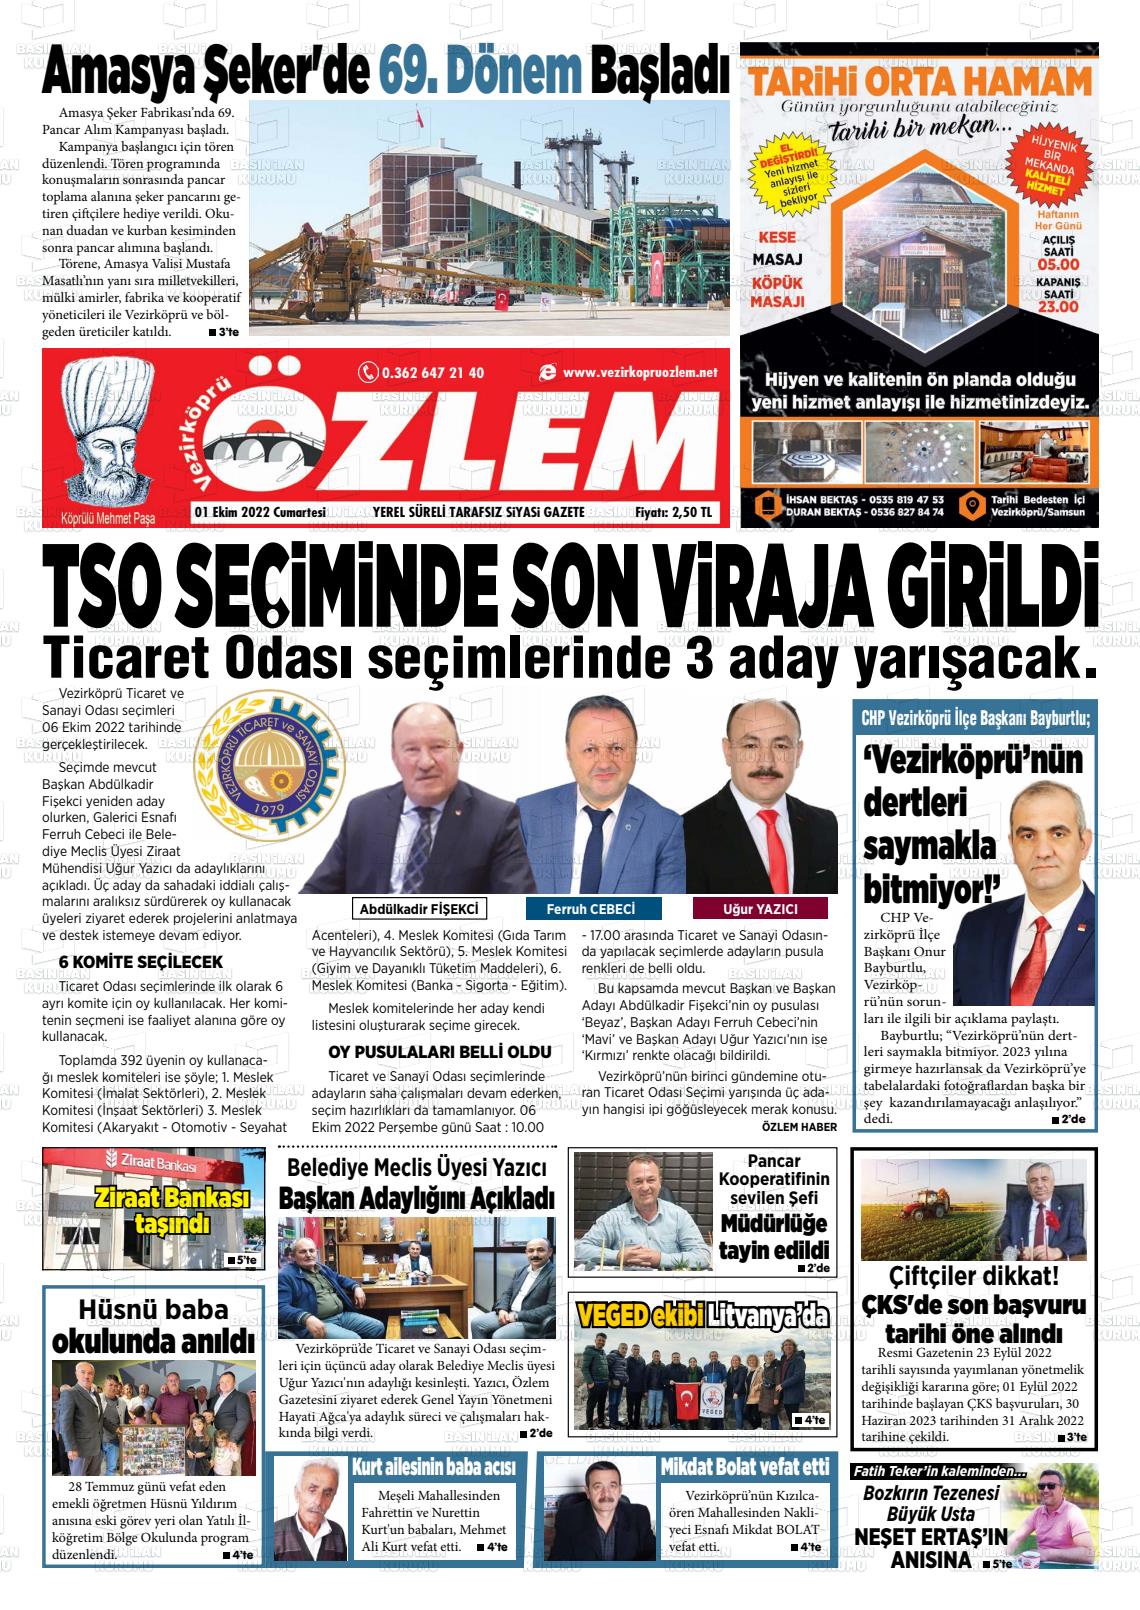 01 Ekim 2022 Vezirköprü Özlem Gazete Manşeti